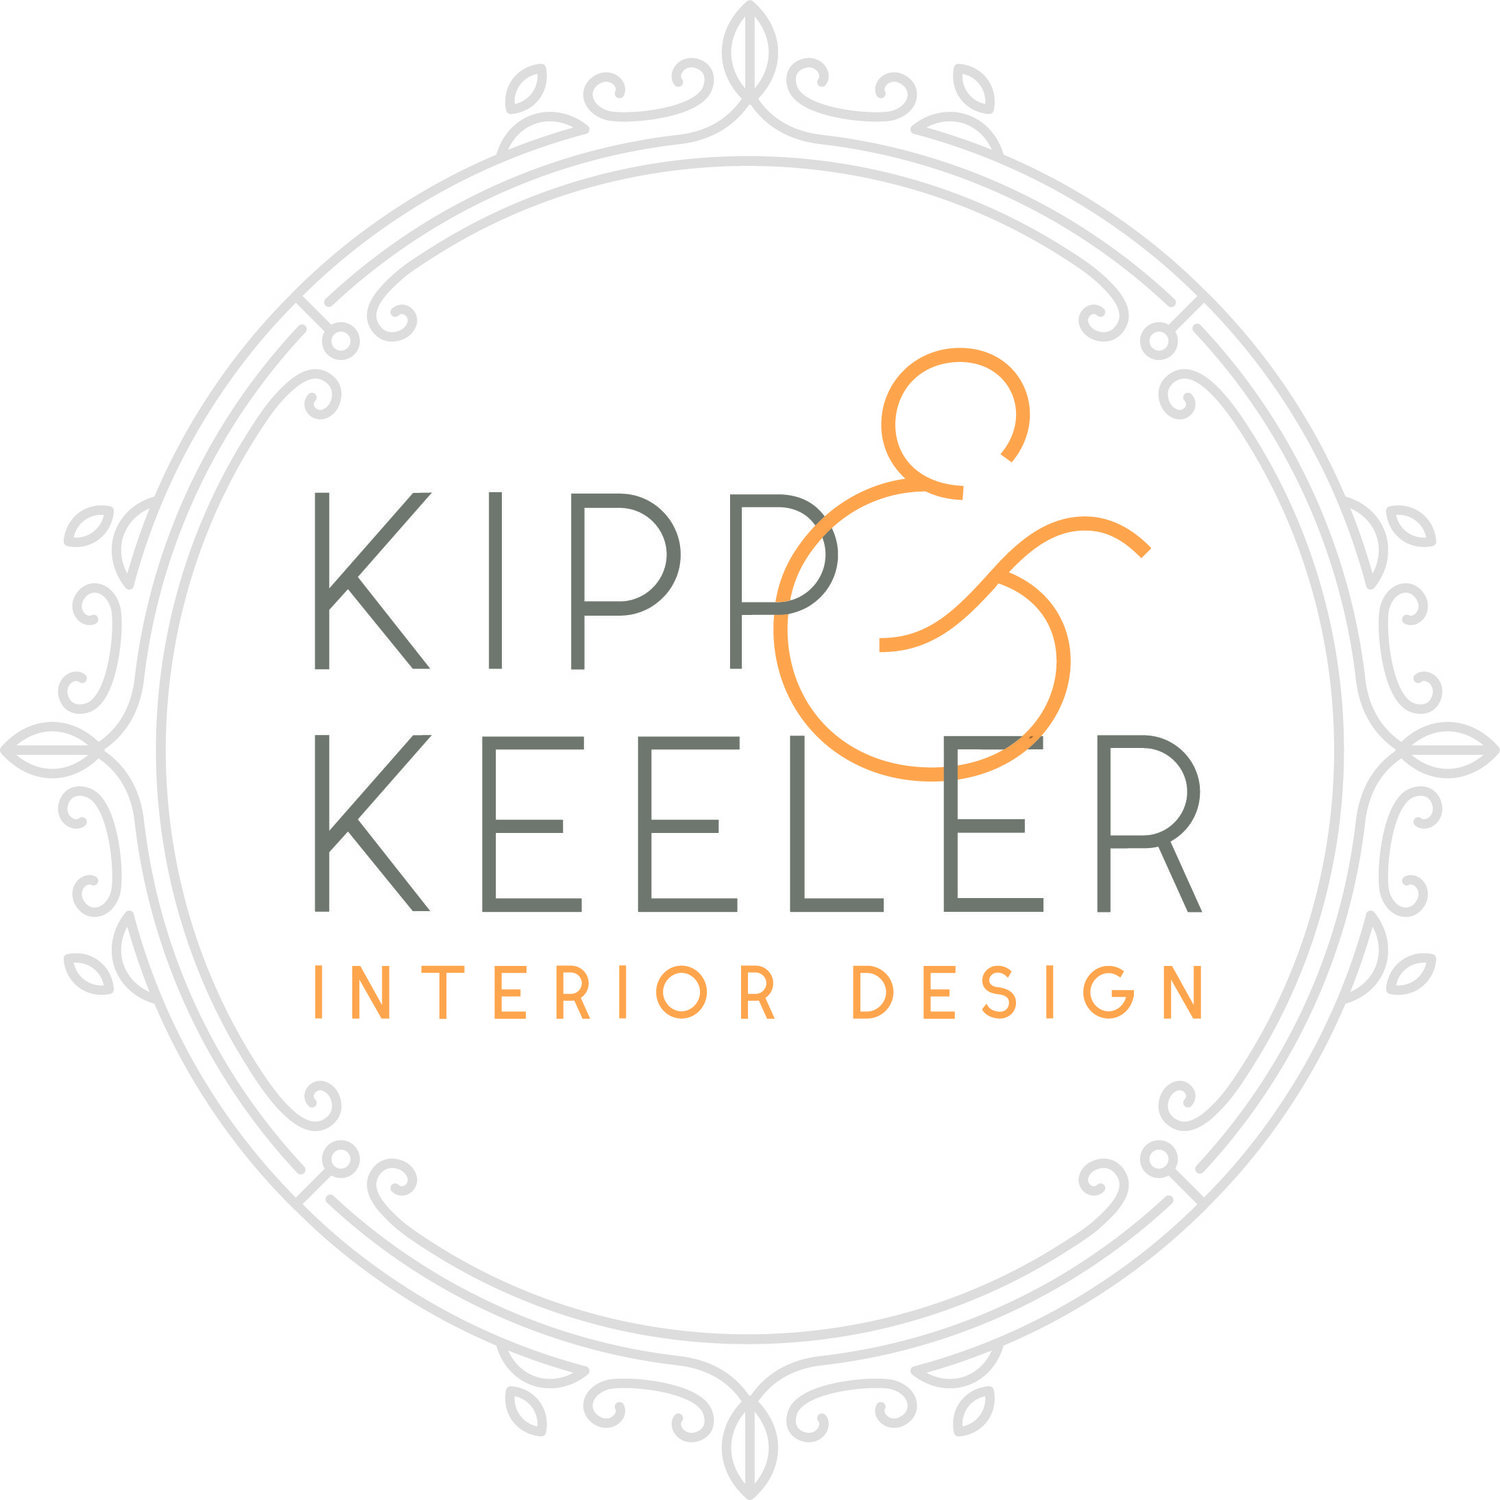 Kipp & Keeler